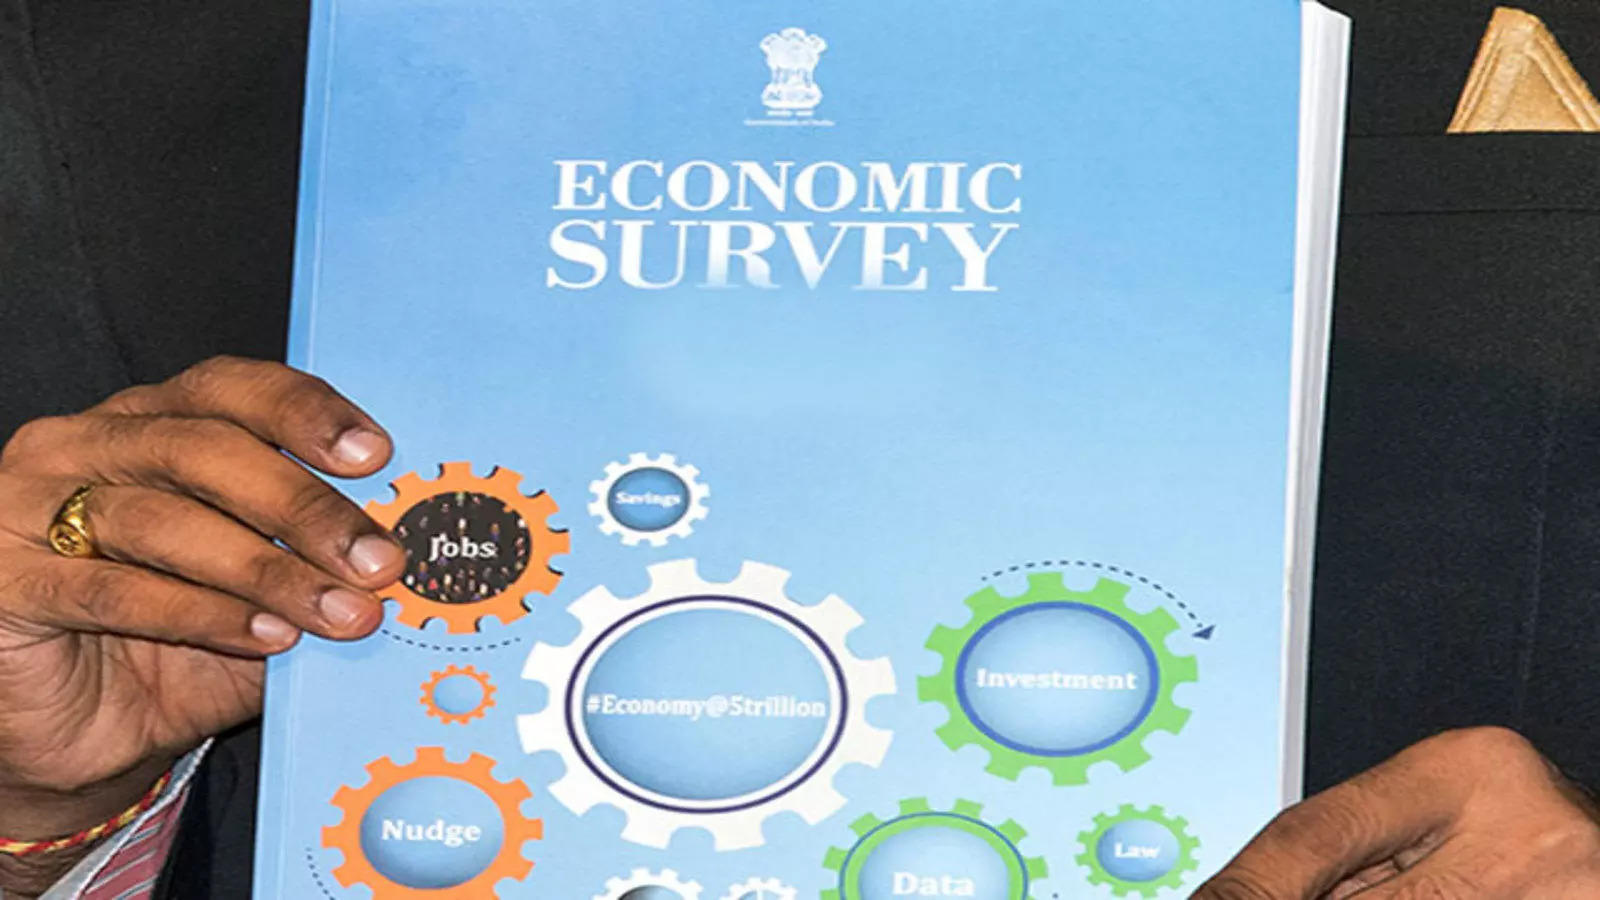 
EXPLAINED: India’s annual Economic Survey
